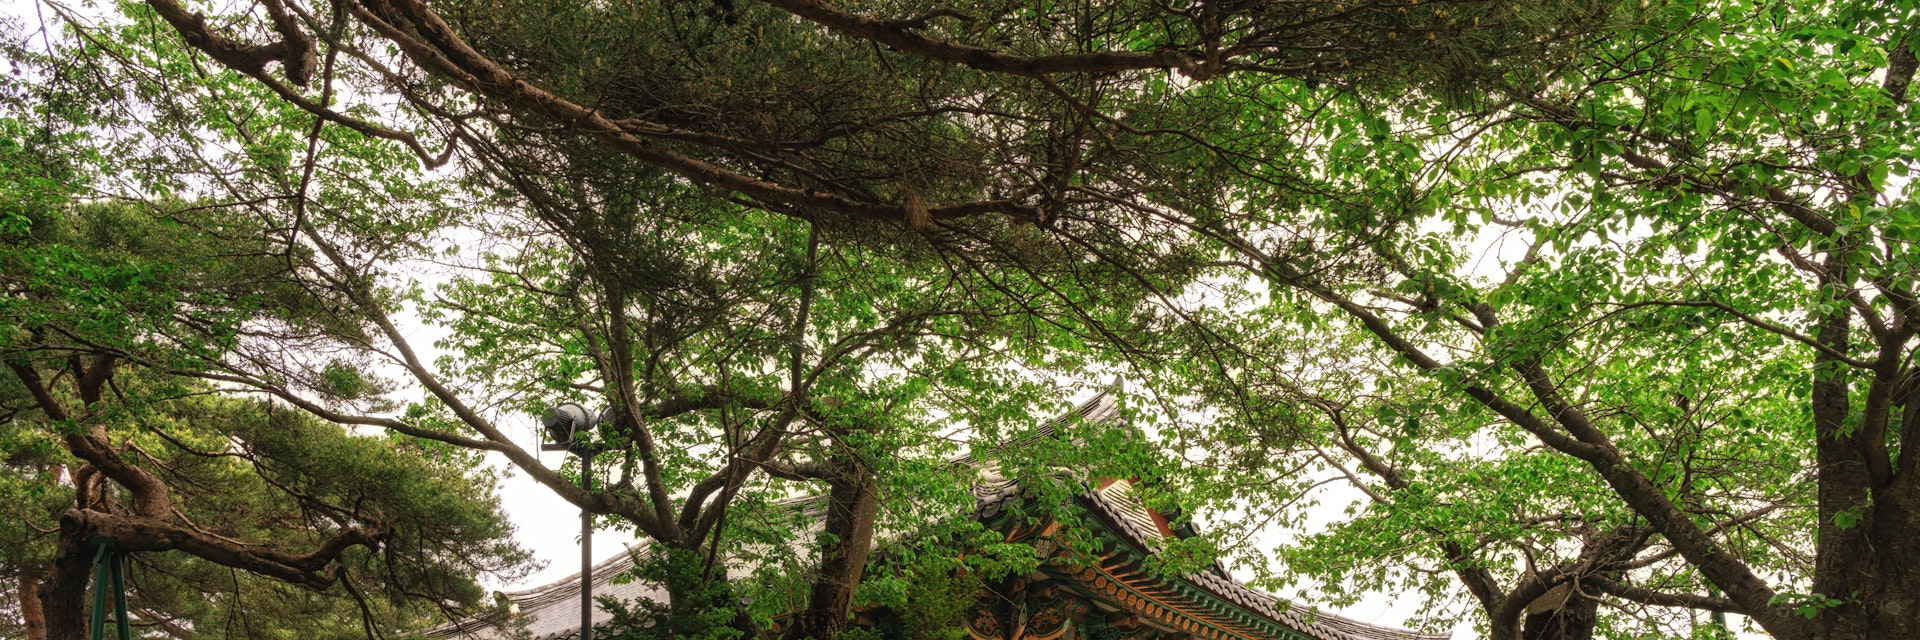 Traditional gyeongpo pagoda taken near the gyeongpo lake in gangneung, south korea. Taken during summer